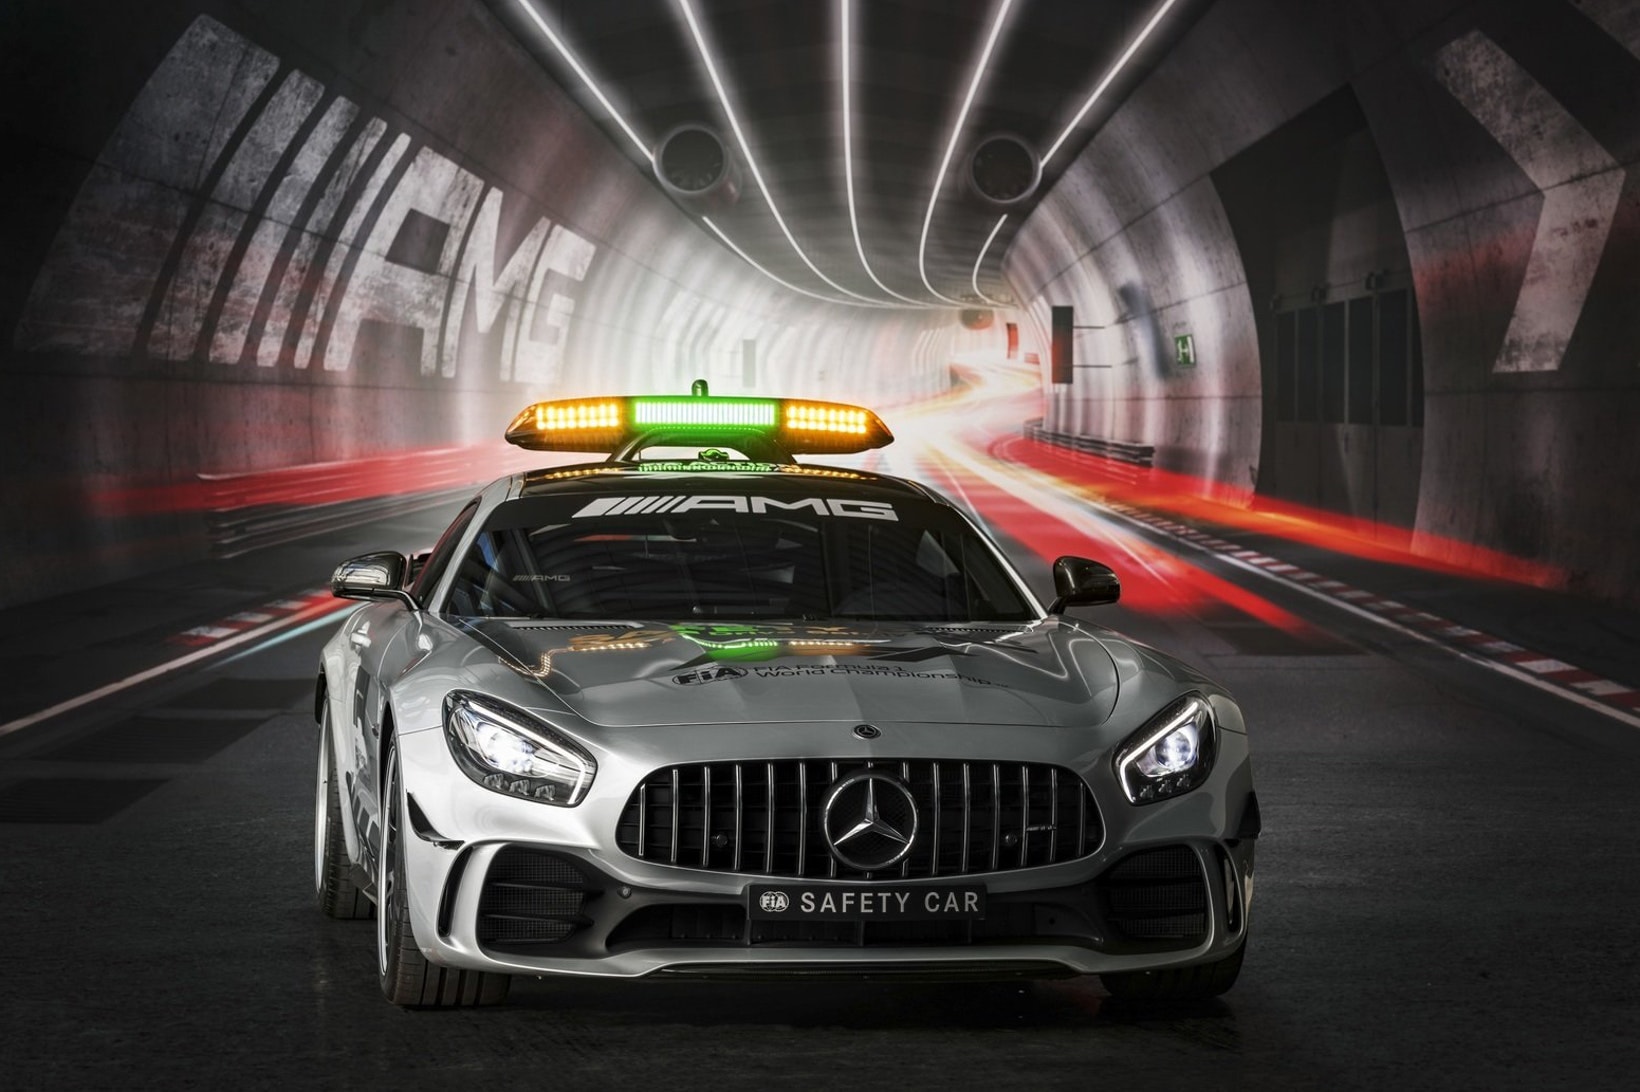 Mercedes-AMG 正式公佈「史上最強」F1 安全車官方圖片